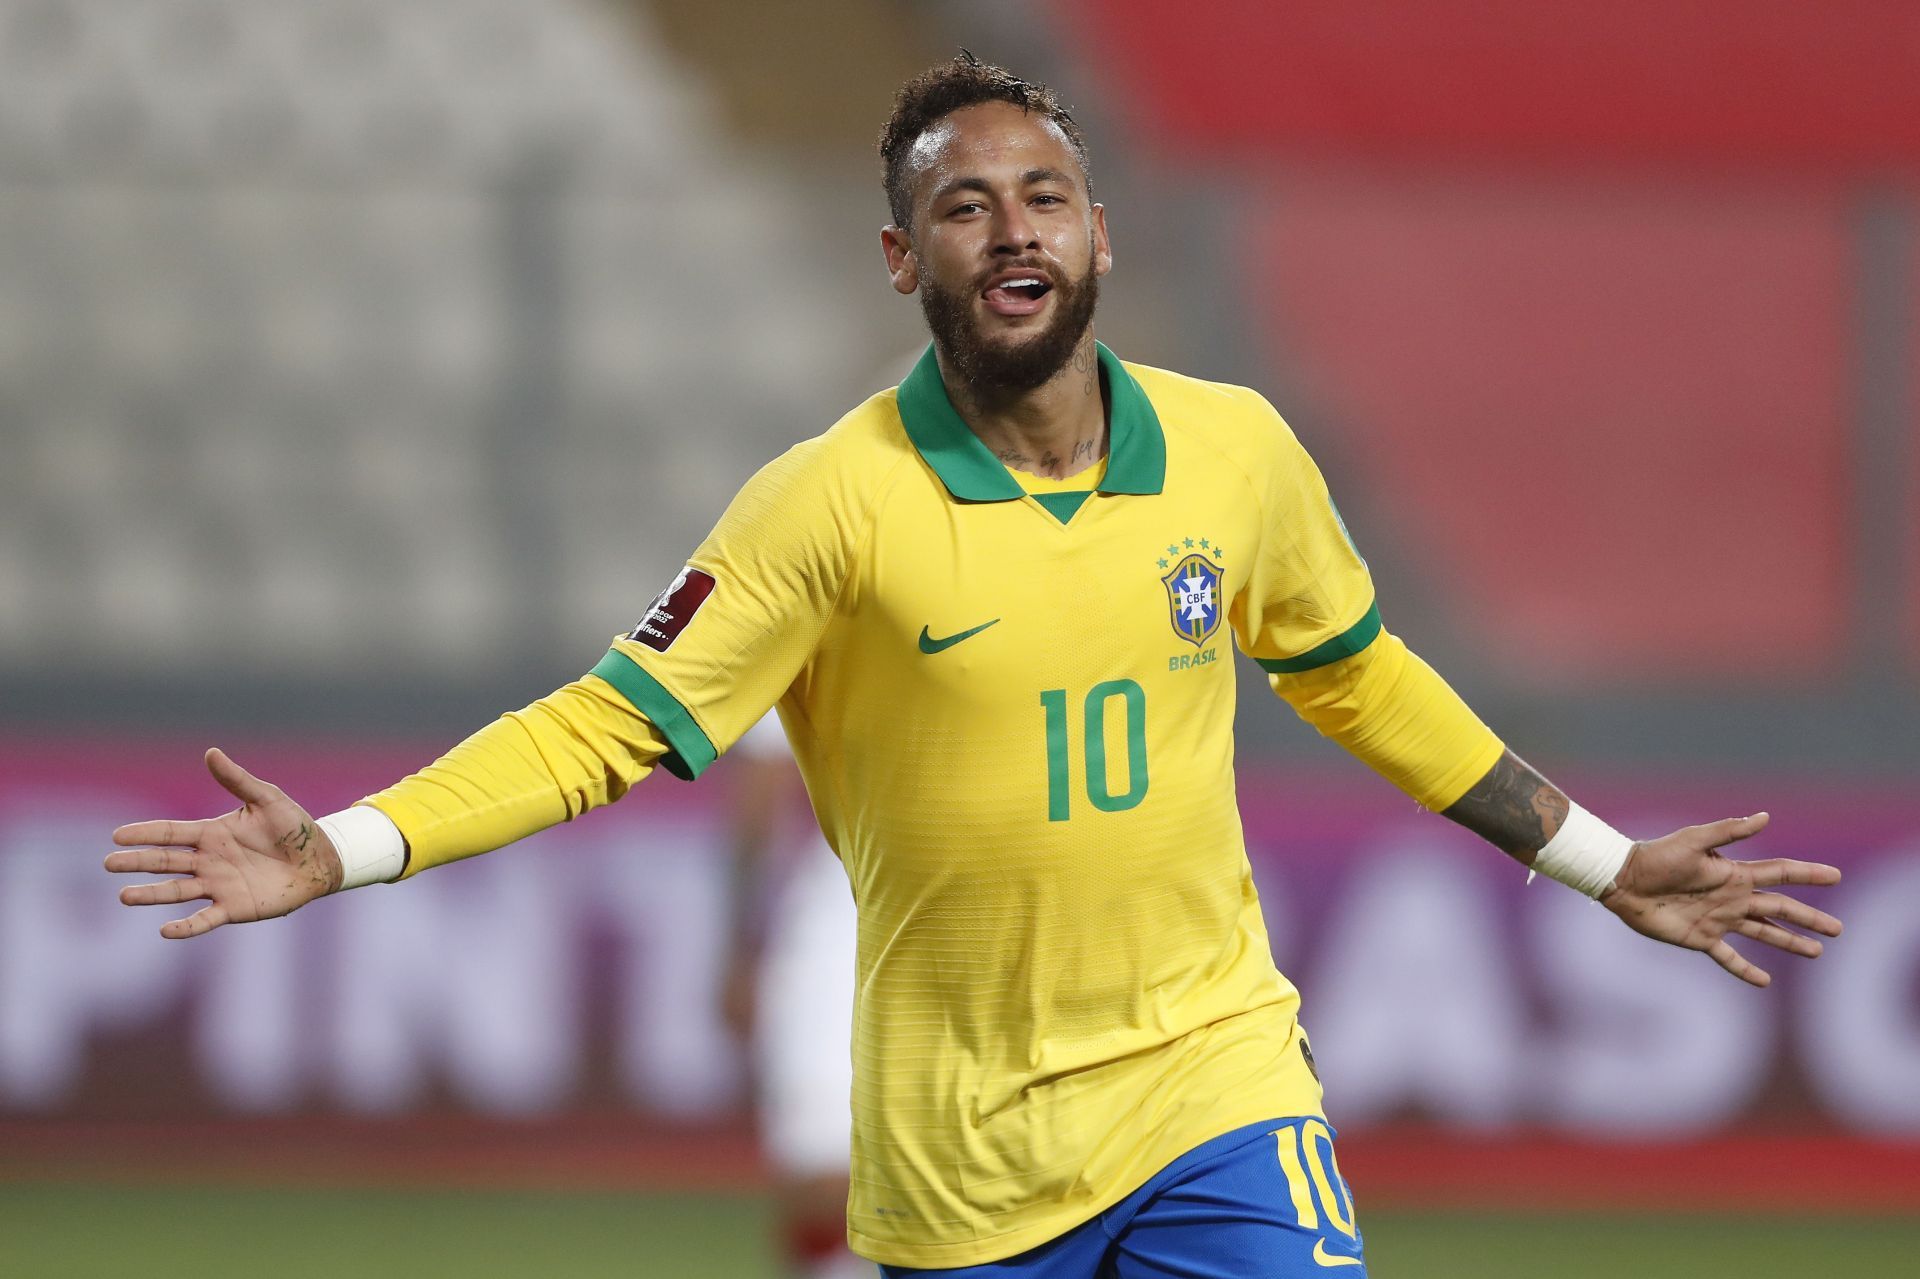 Neymar has helped Brazil stay as a dominant side in South America